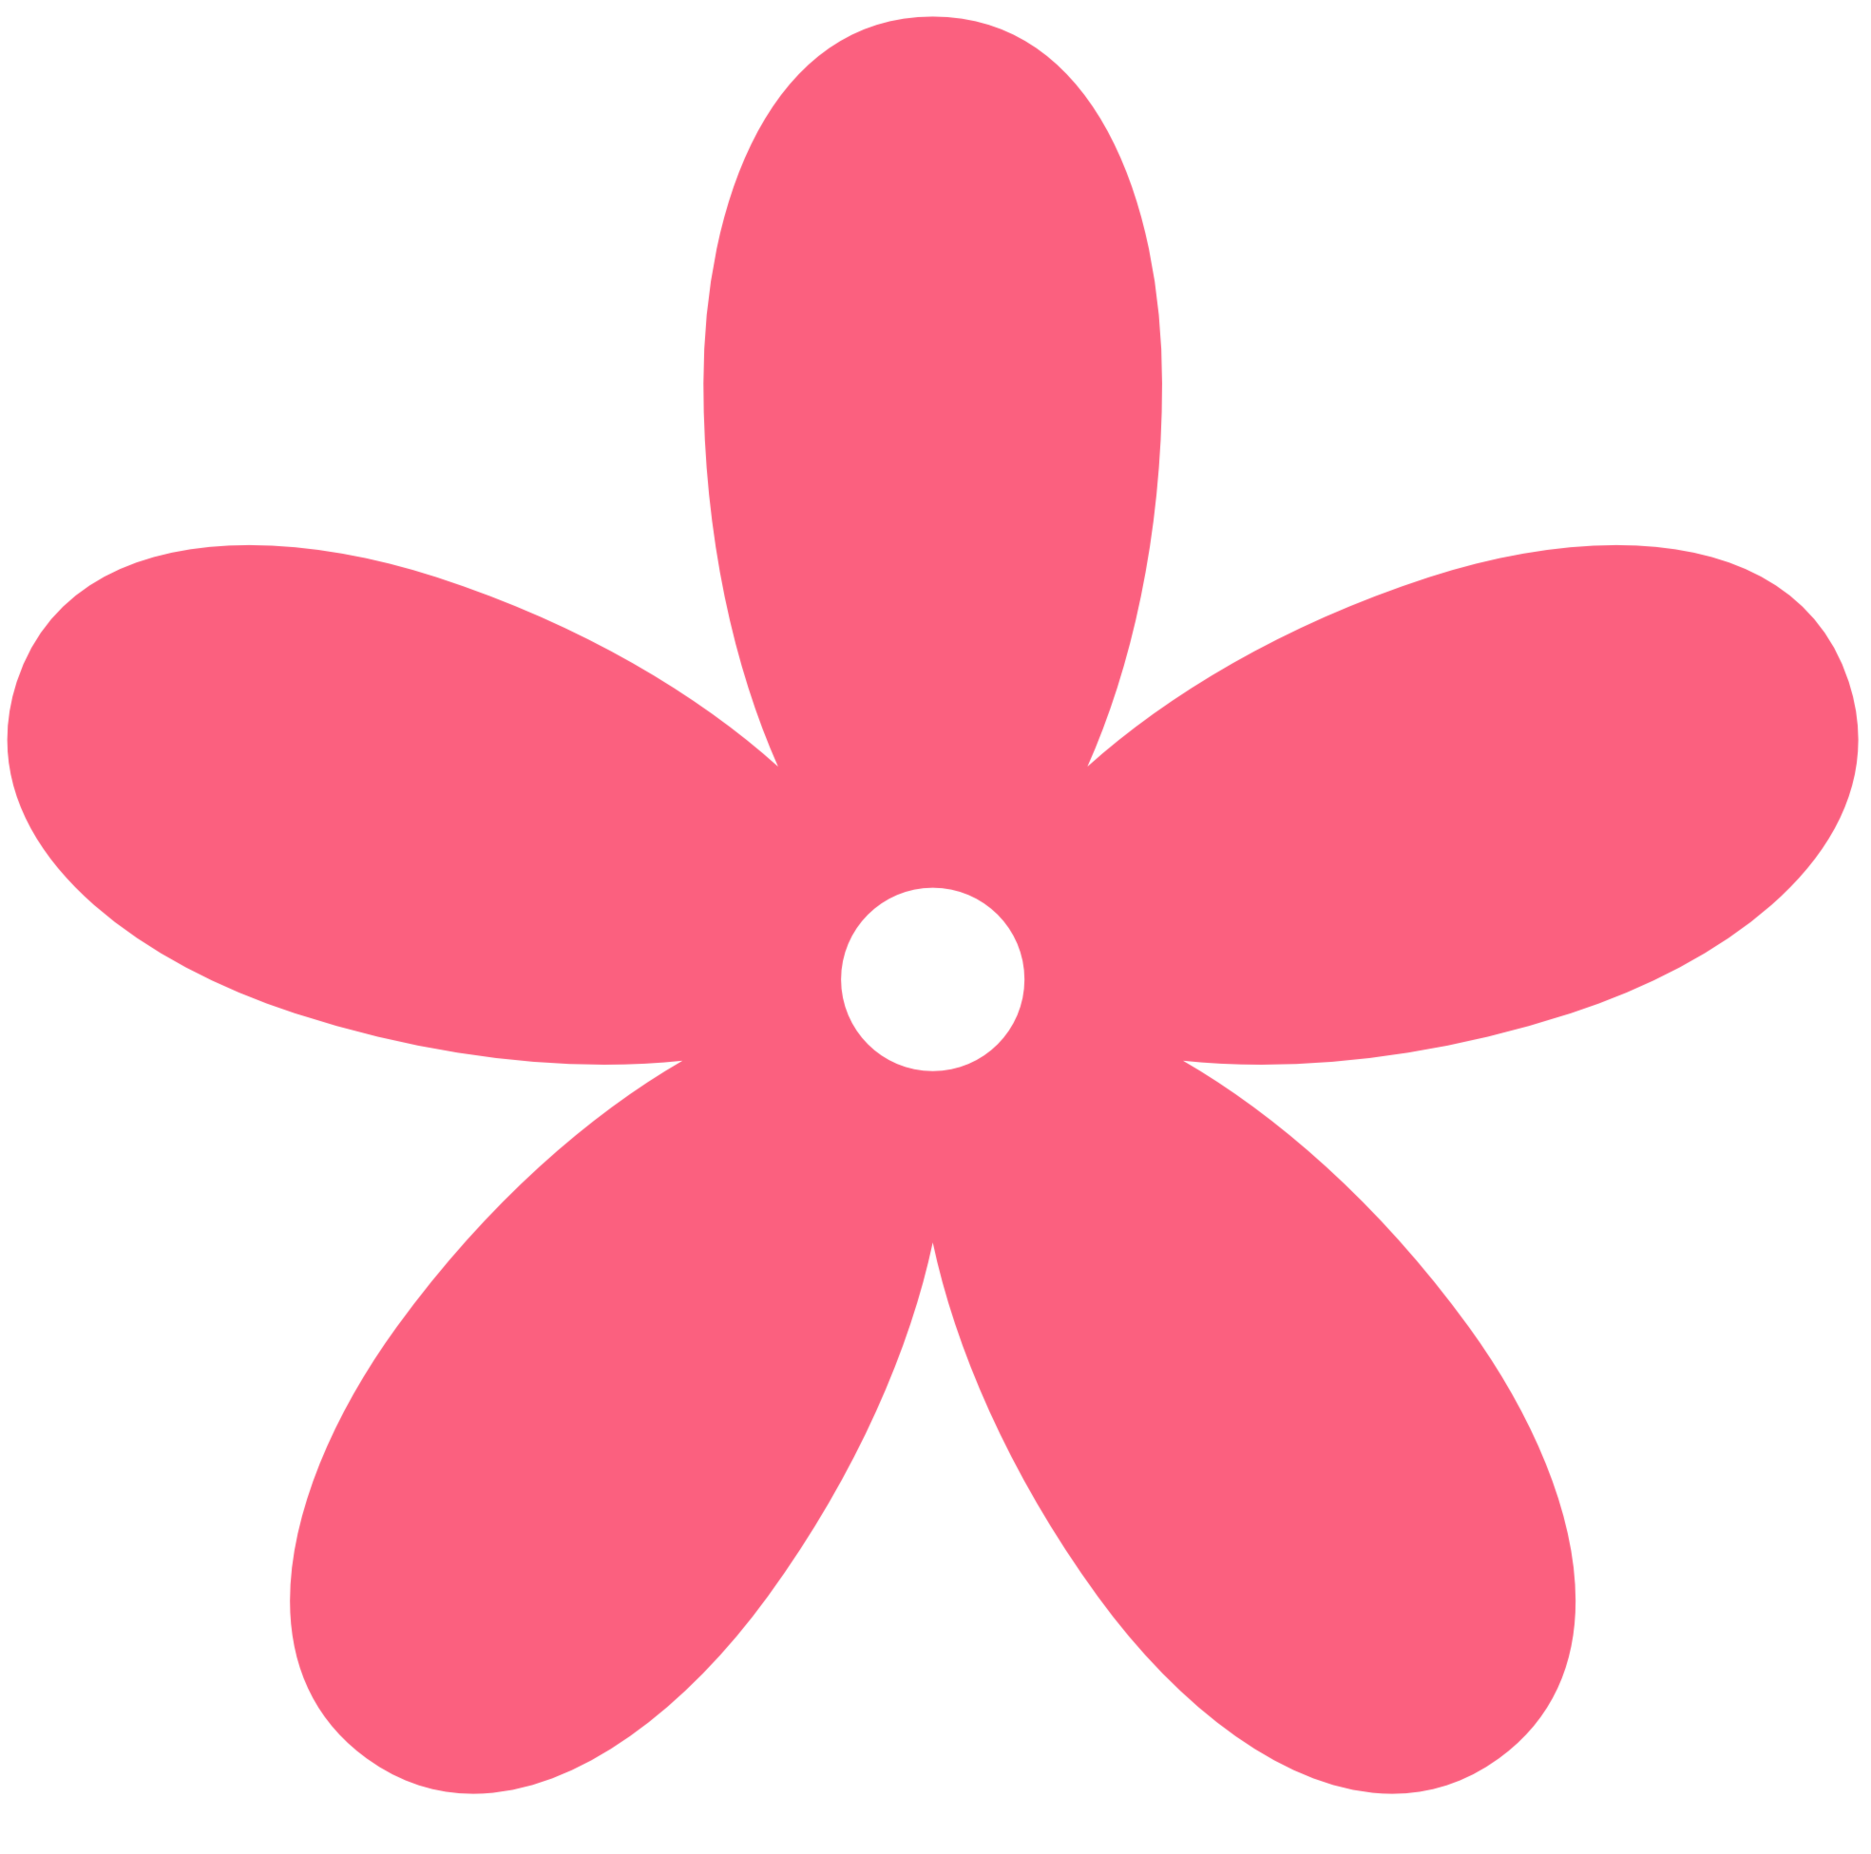 Soft pink flower clipart - Clipground